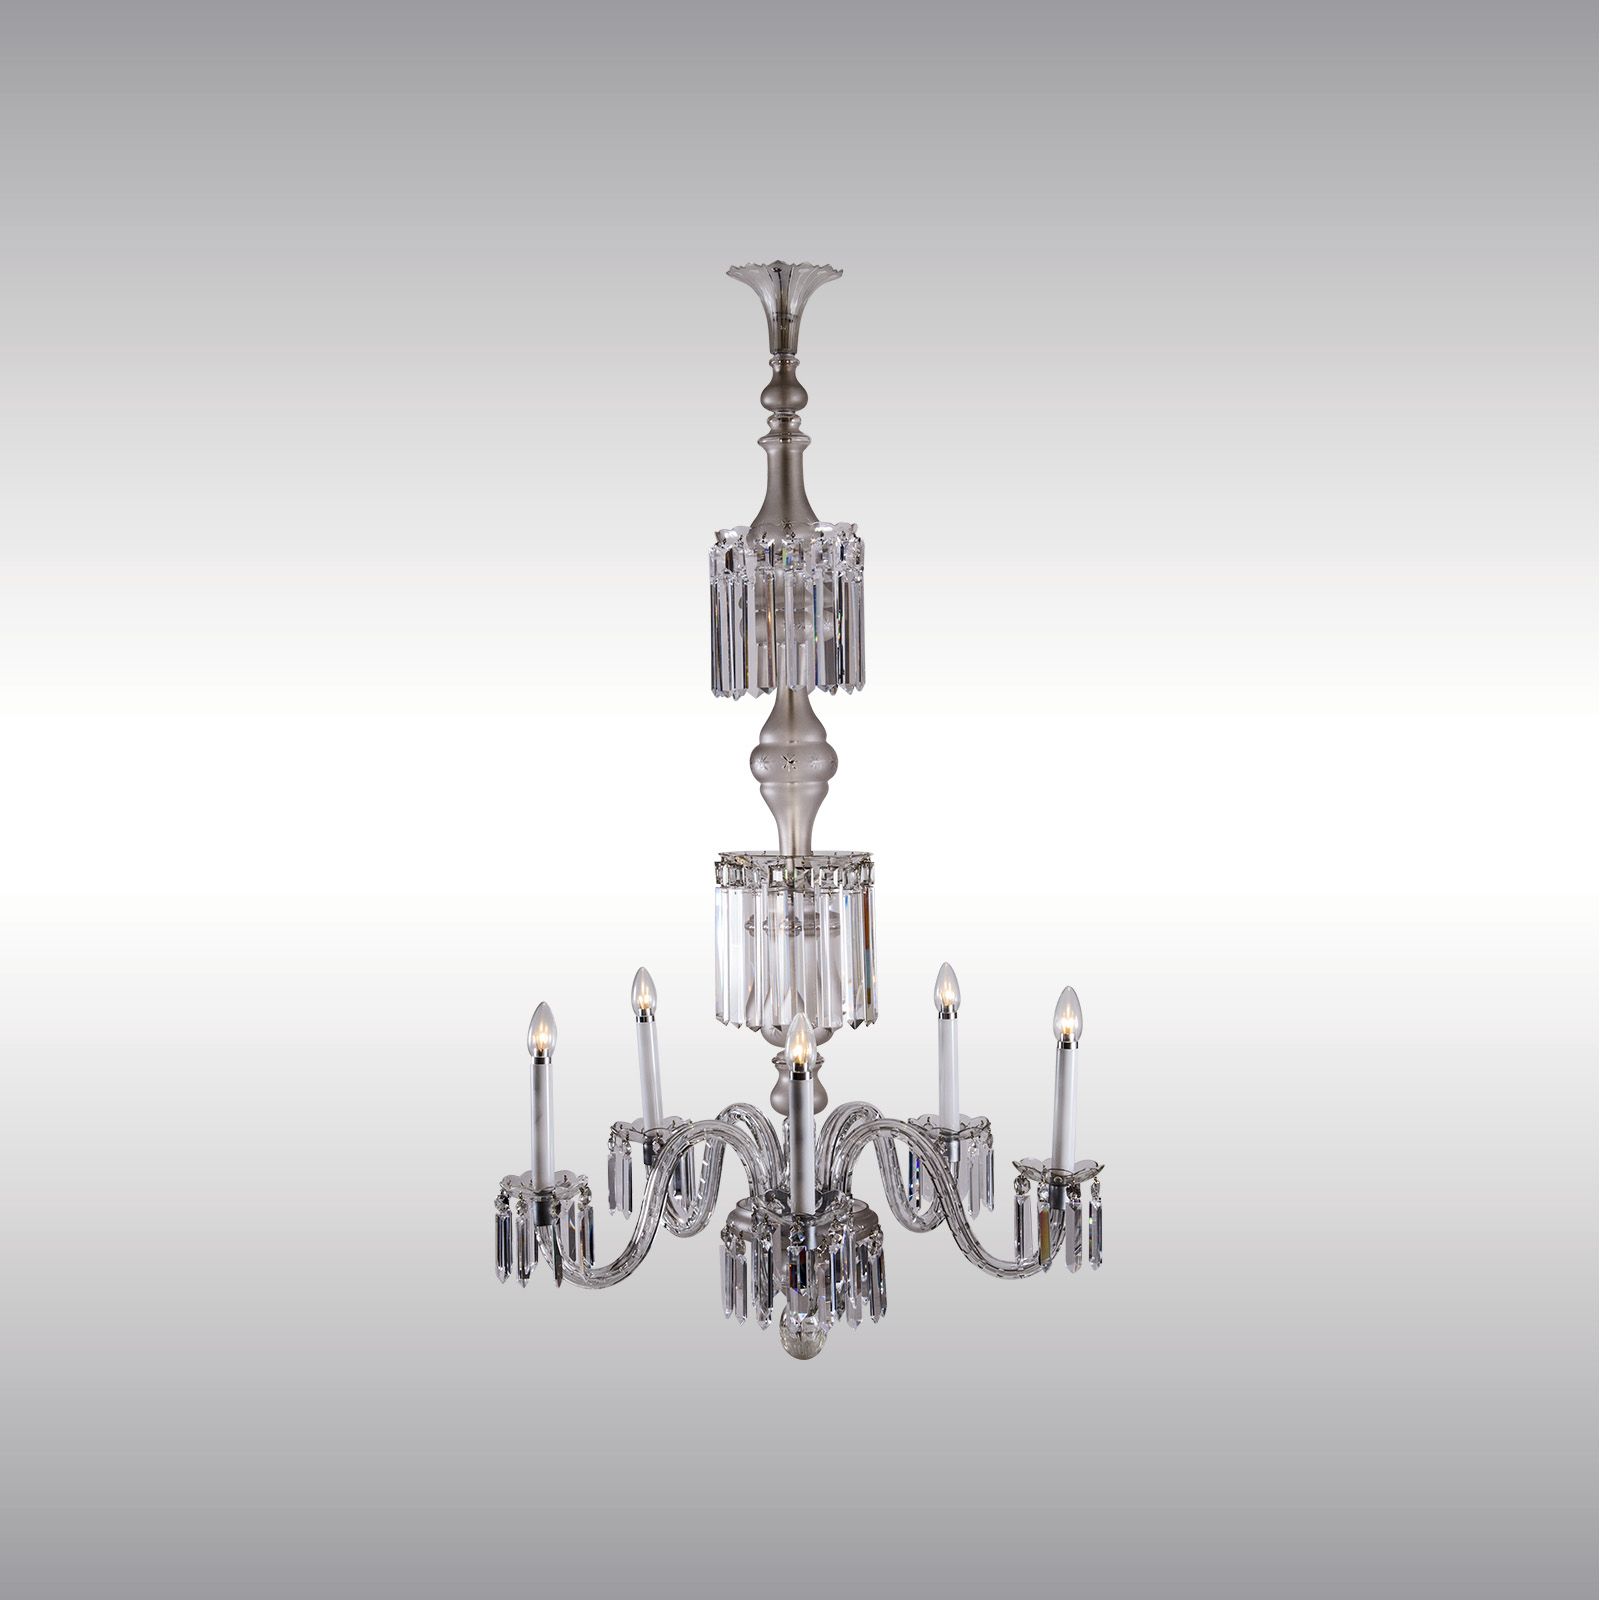 WOKA LAMPS VIENNA - OrderNr.: 60026|Elegant Glass Chandelier 1960 - Design: Austrian Mastercraft